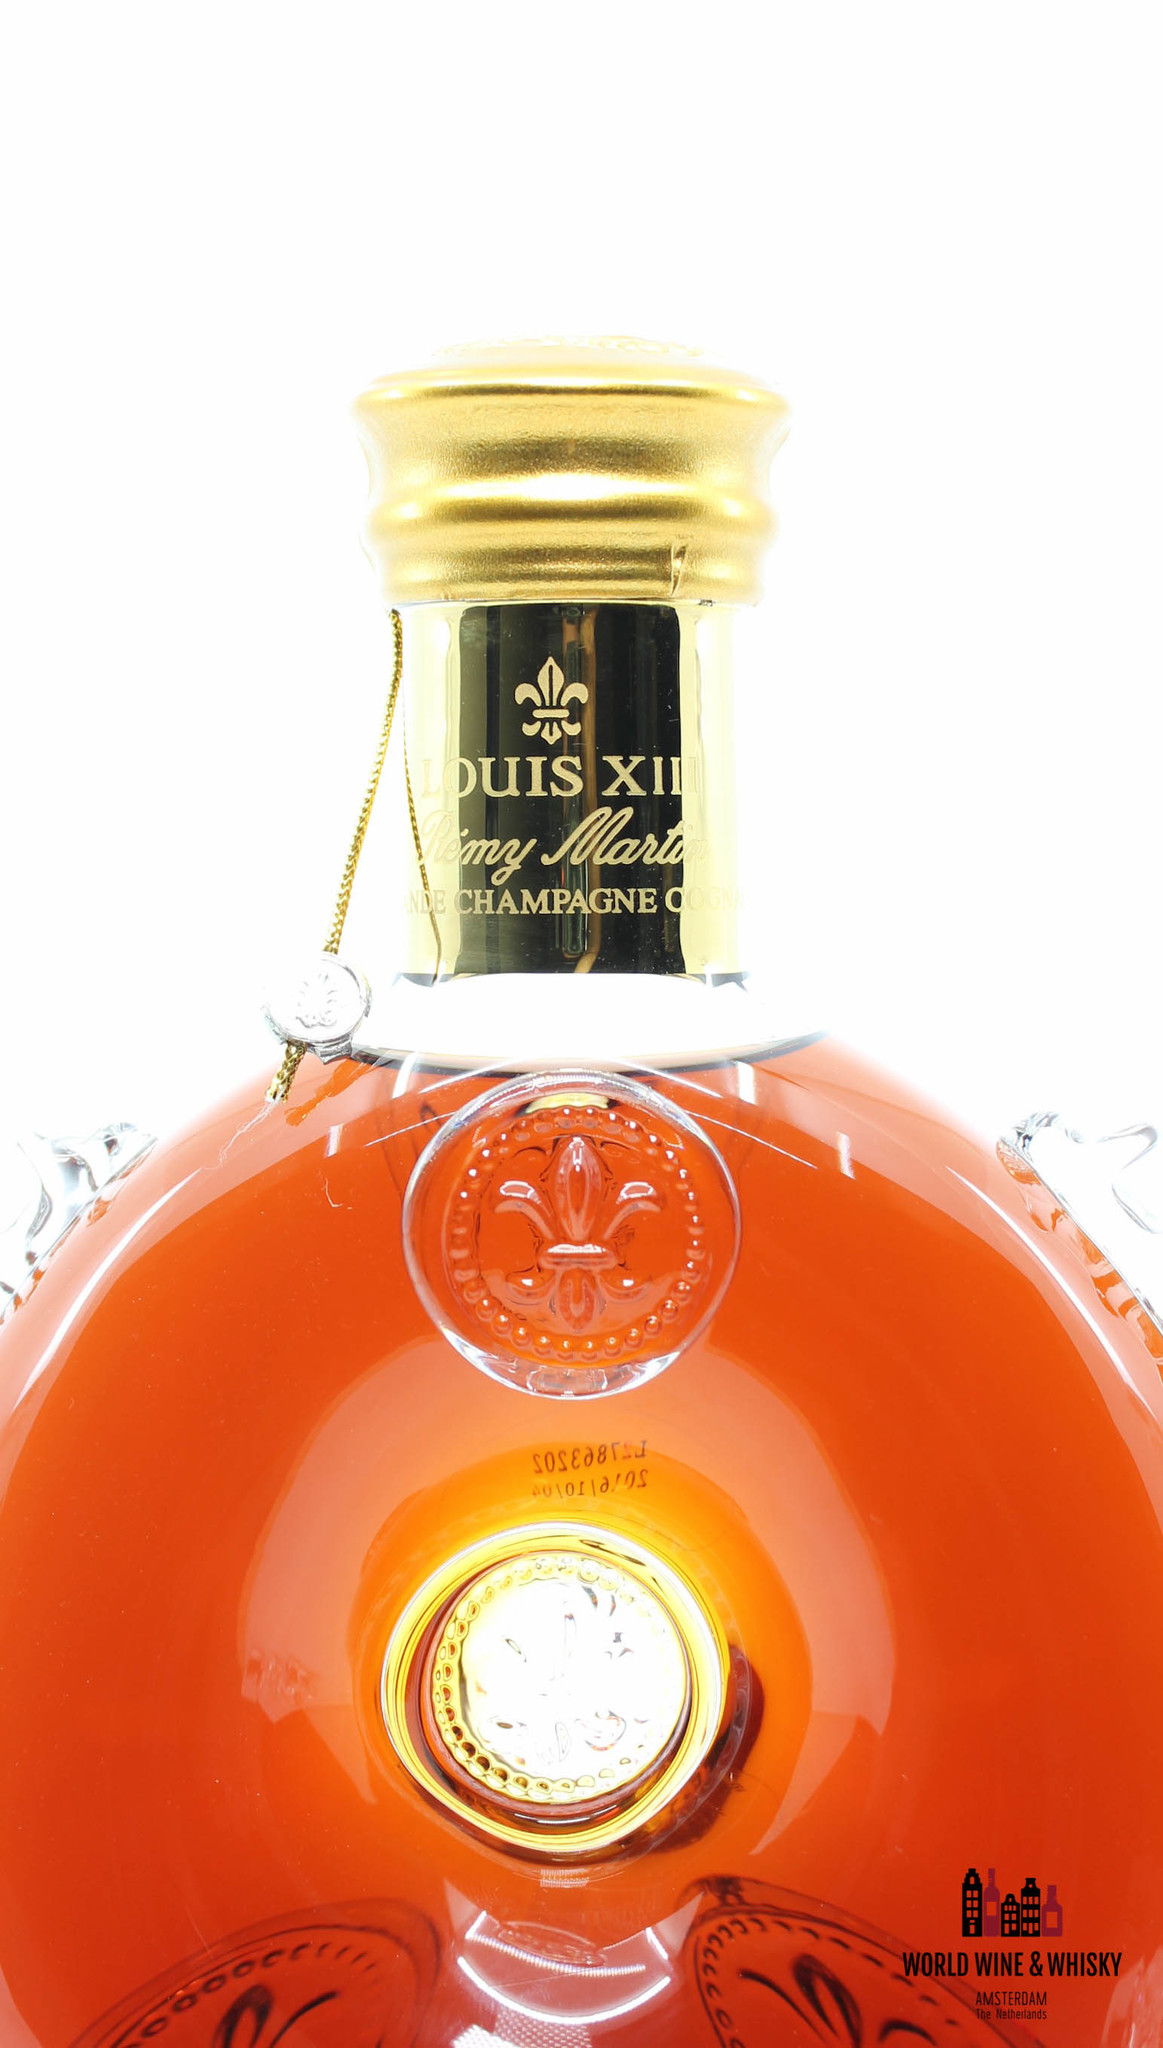 Rémy Martin LOUIS XIII Cognac Fine Champagne 40% Vol. 0,7l in Giftbox